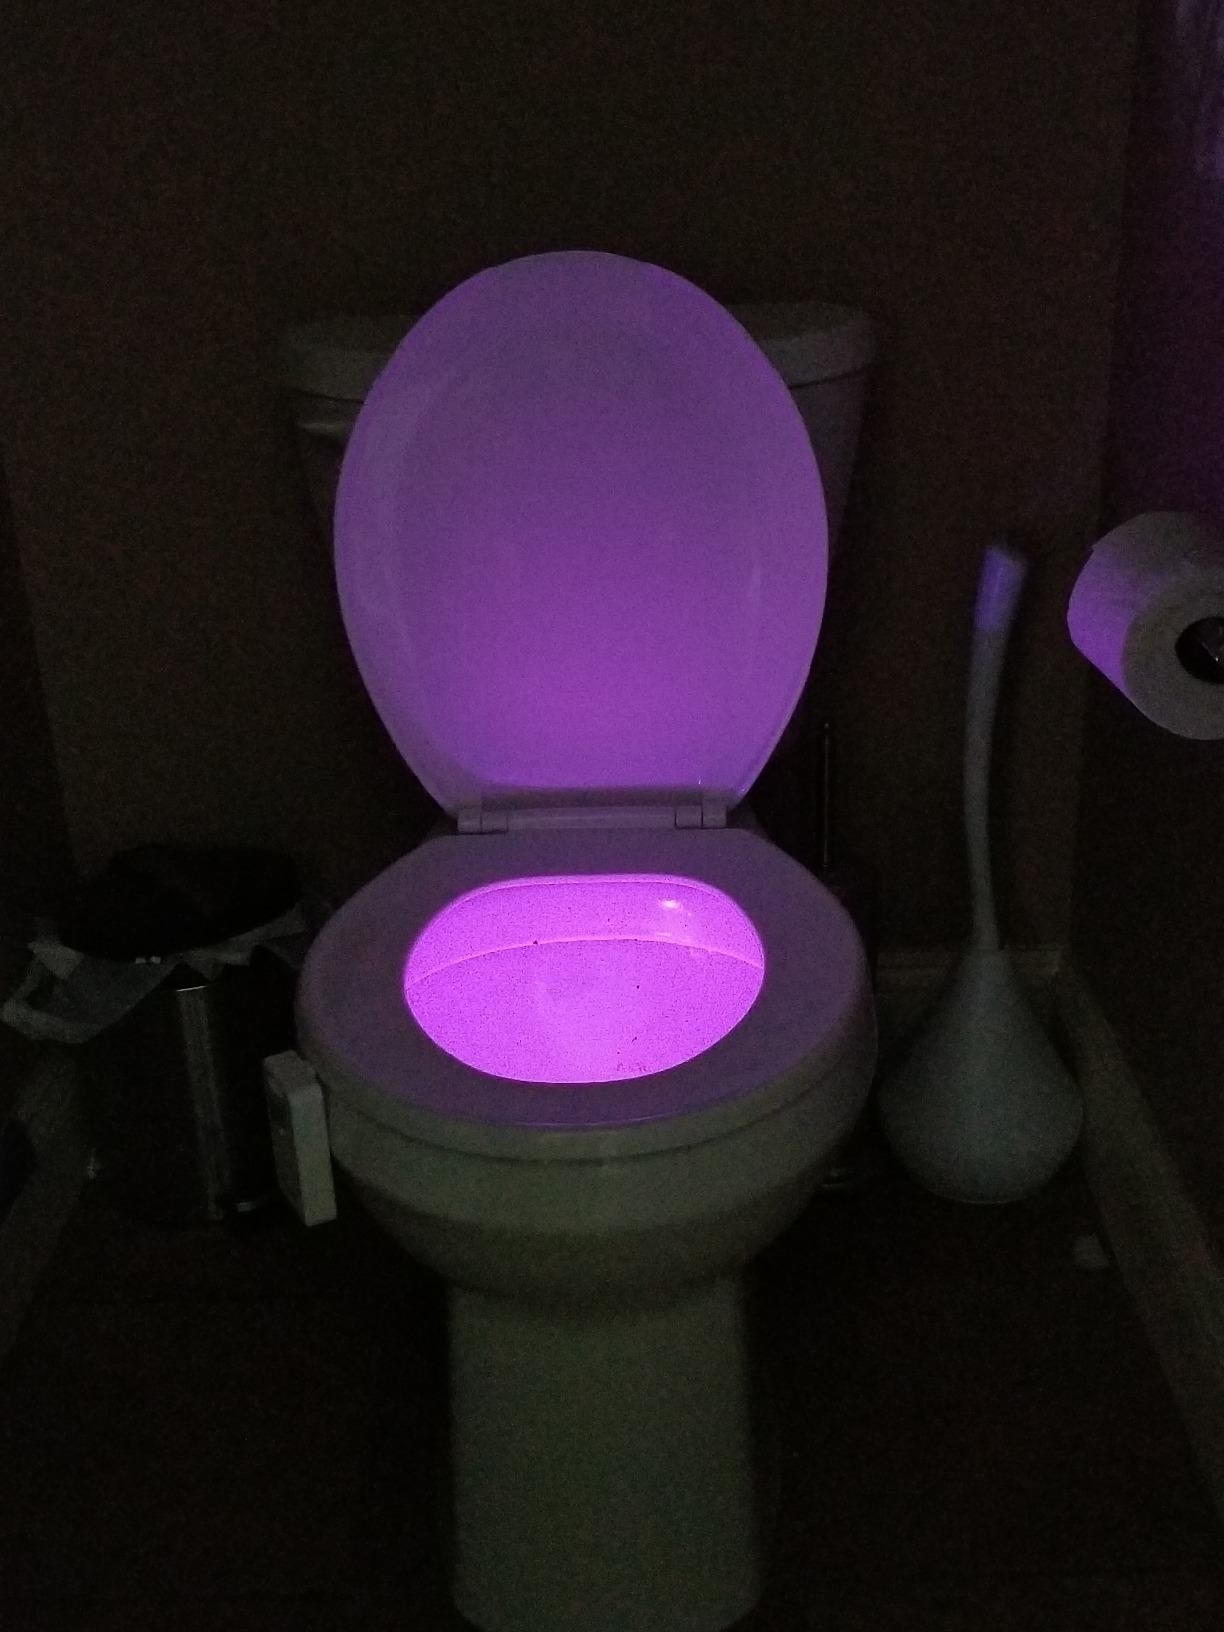 A toilet that is glowing purple